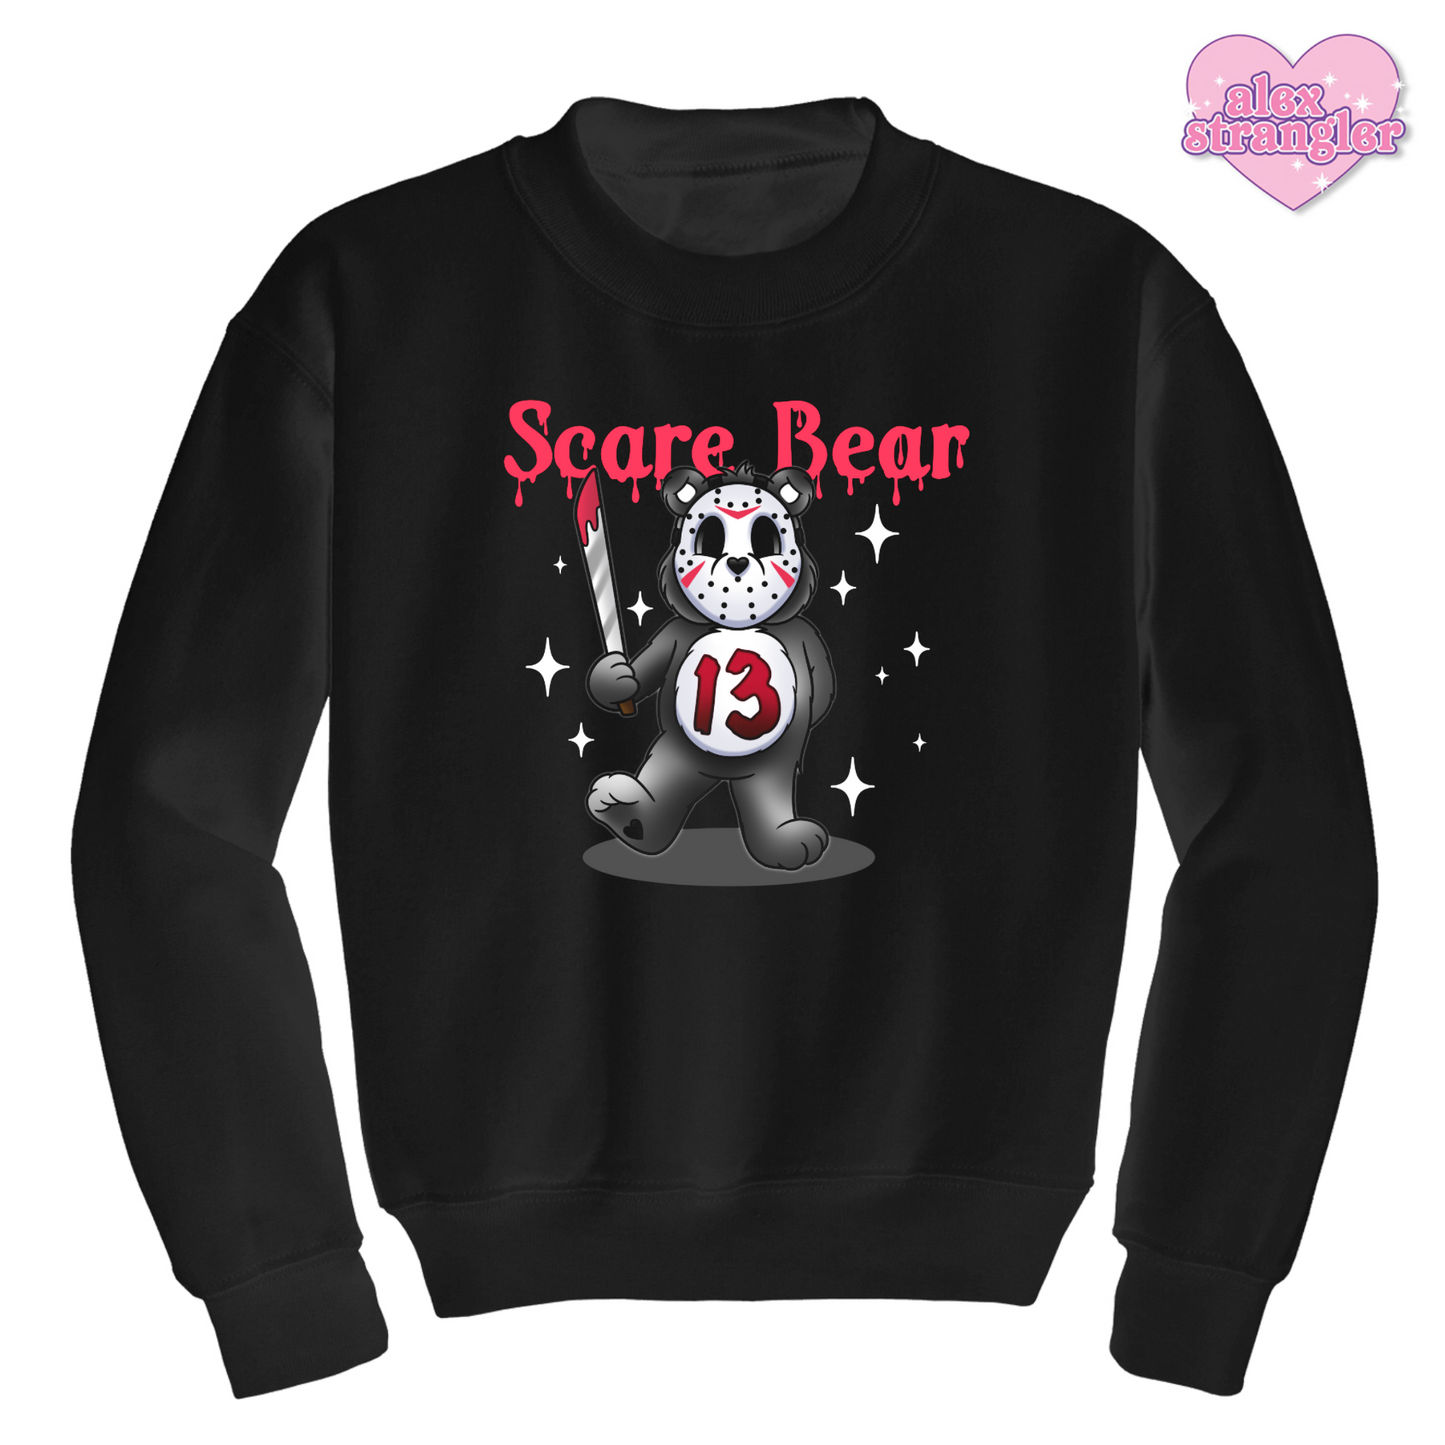 Scare Bear - Men's/Unisex Crewneck Sweatshirt